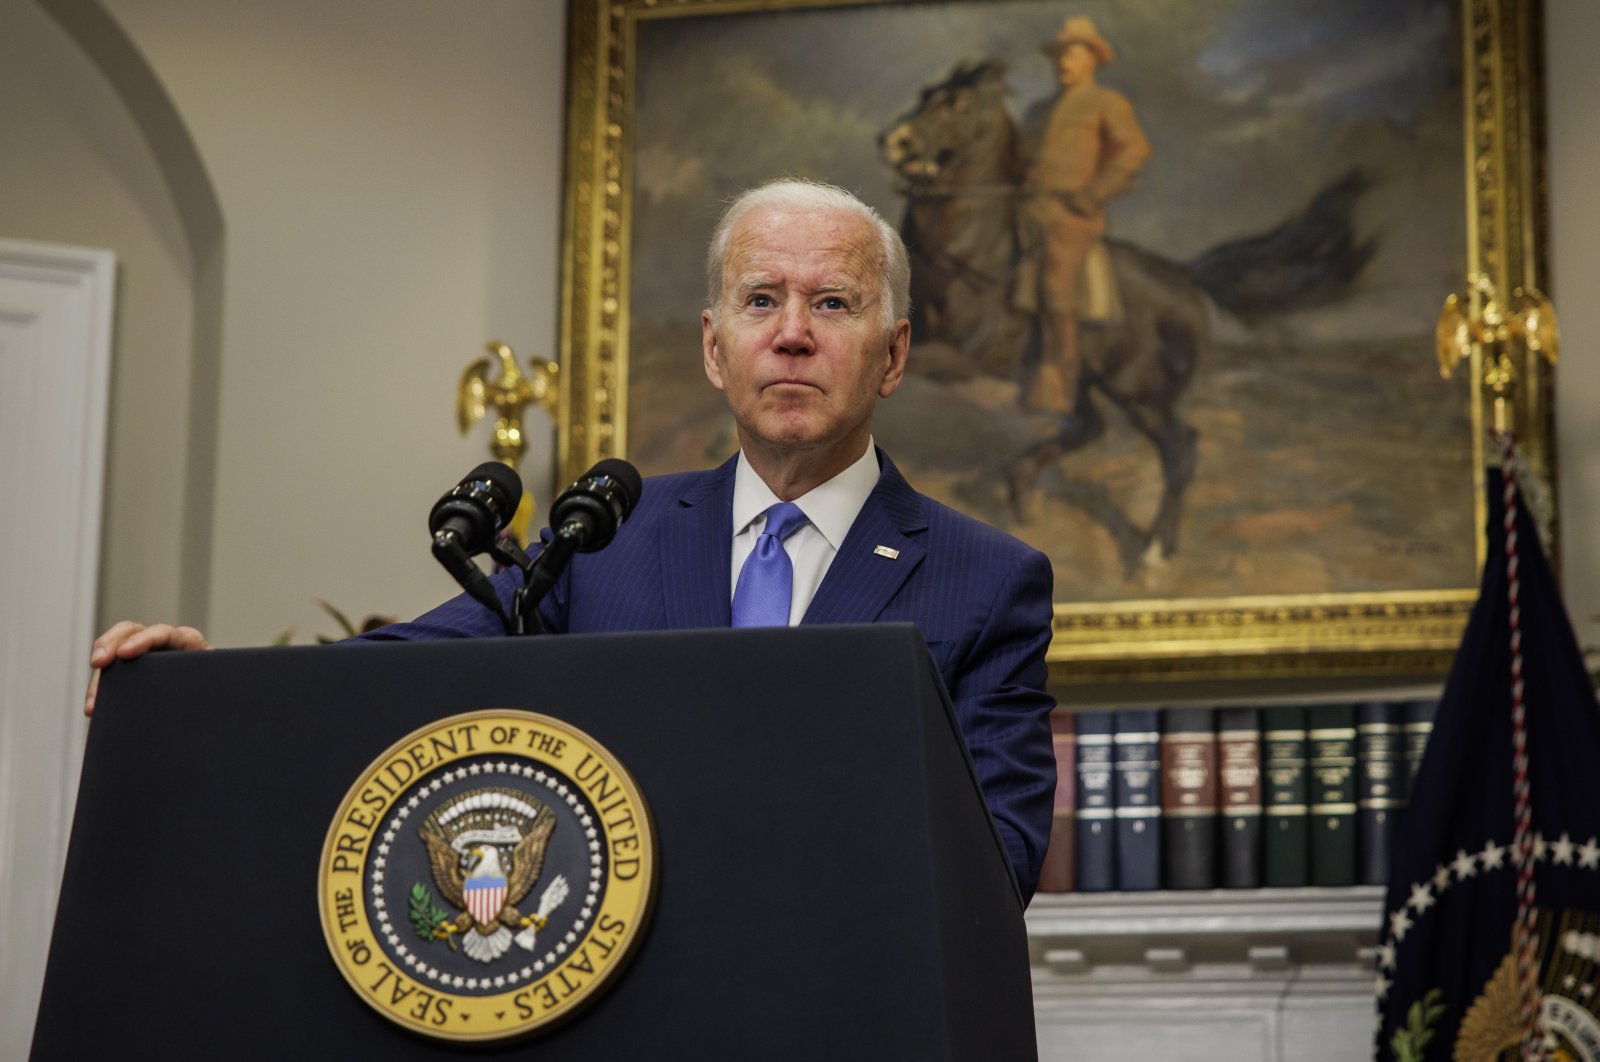 U.S. President Joe Biden speaks in the Roosevelt Room of the White House in Washington, D.C., April 28, 2022. (EPA Photo)